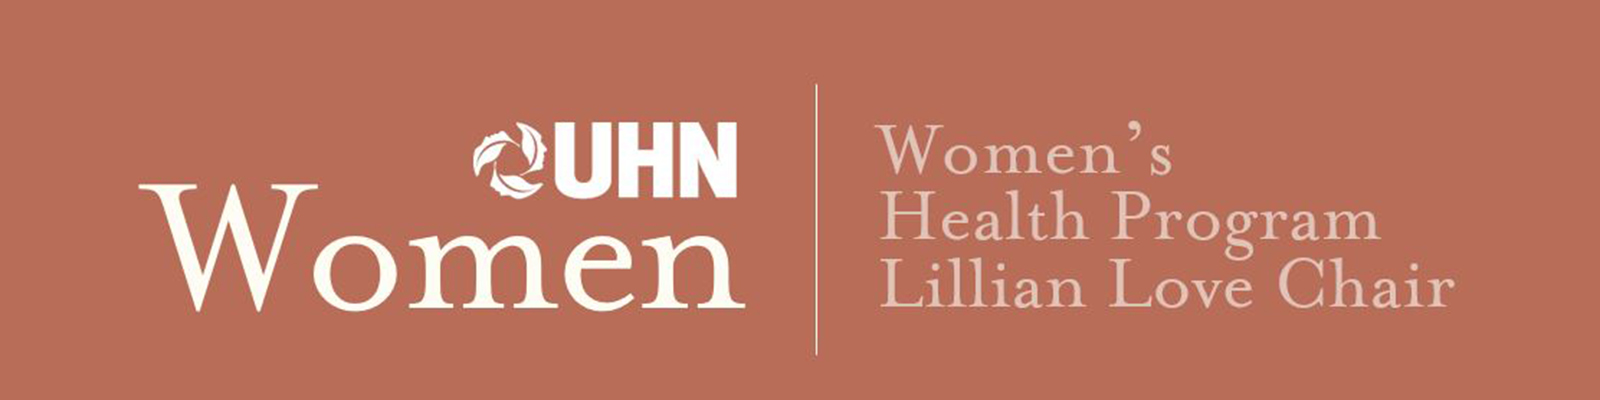 Women's Health Program logo